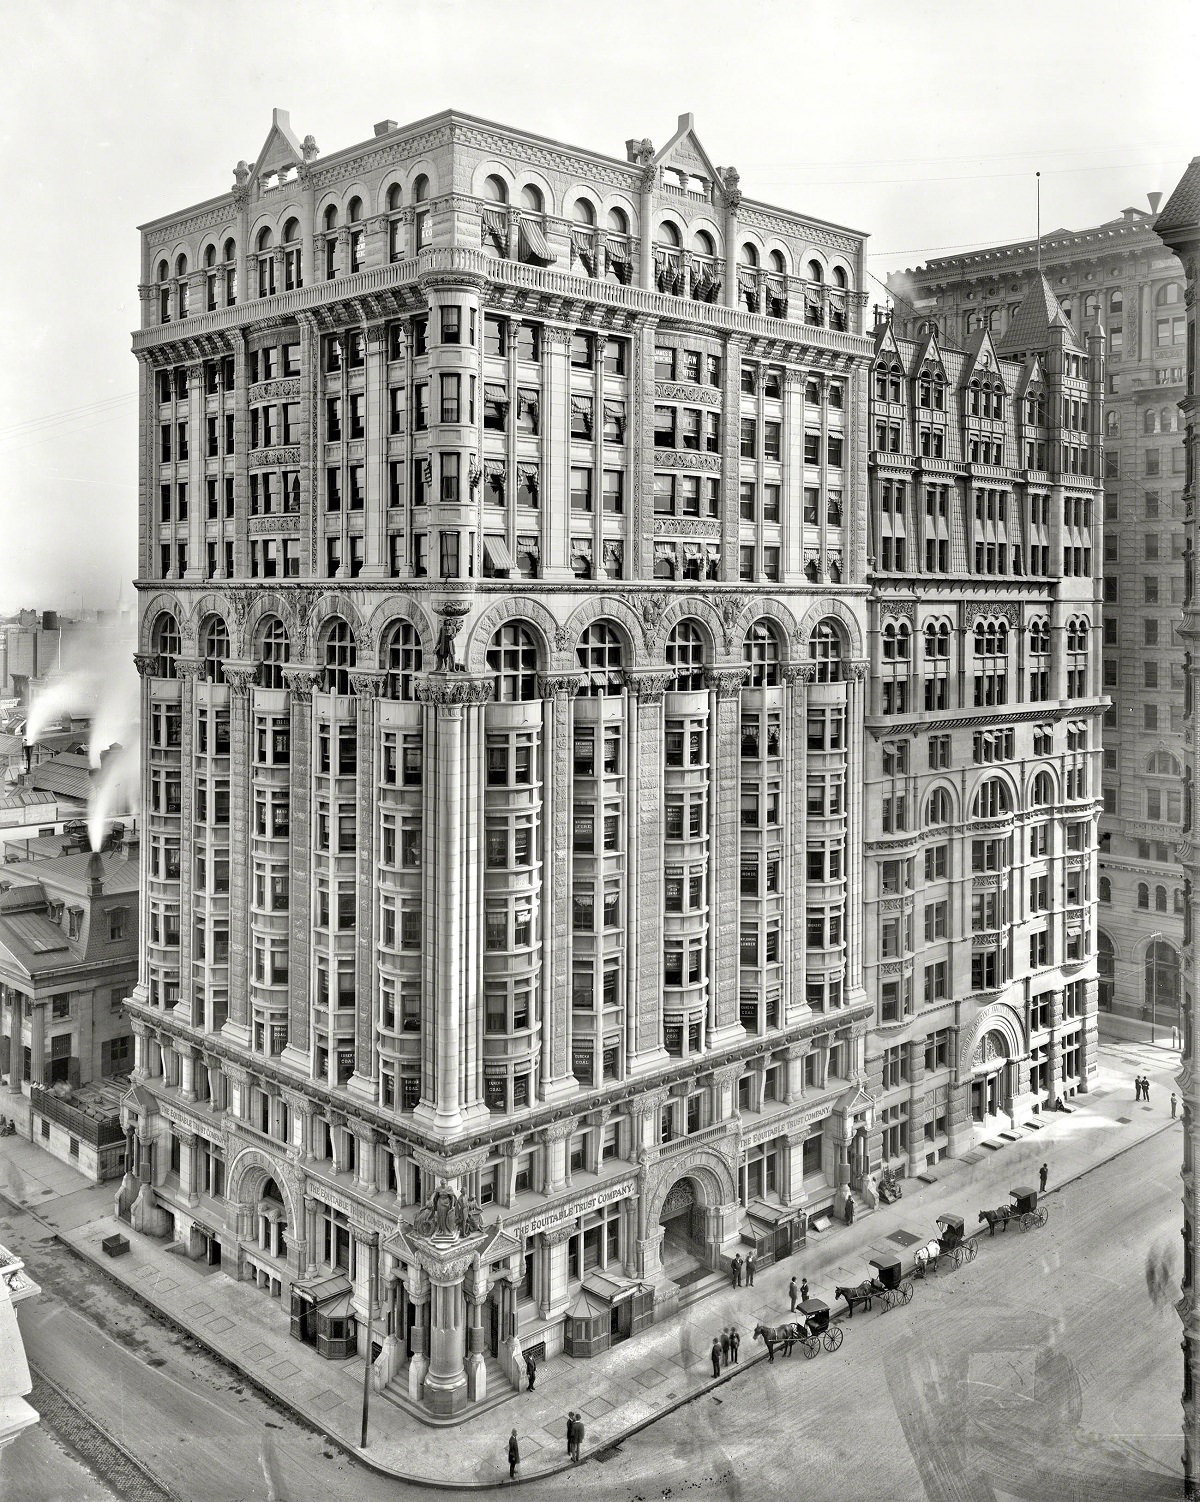 Betz Building, Broad and South Penn Square, Philadelphia circa 1900.